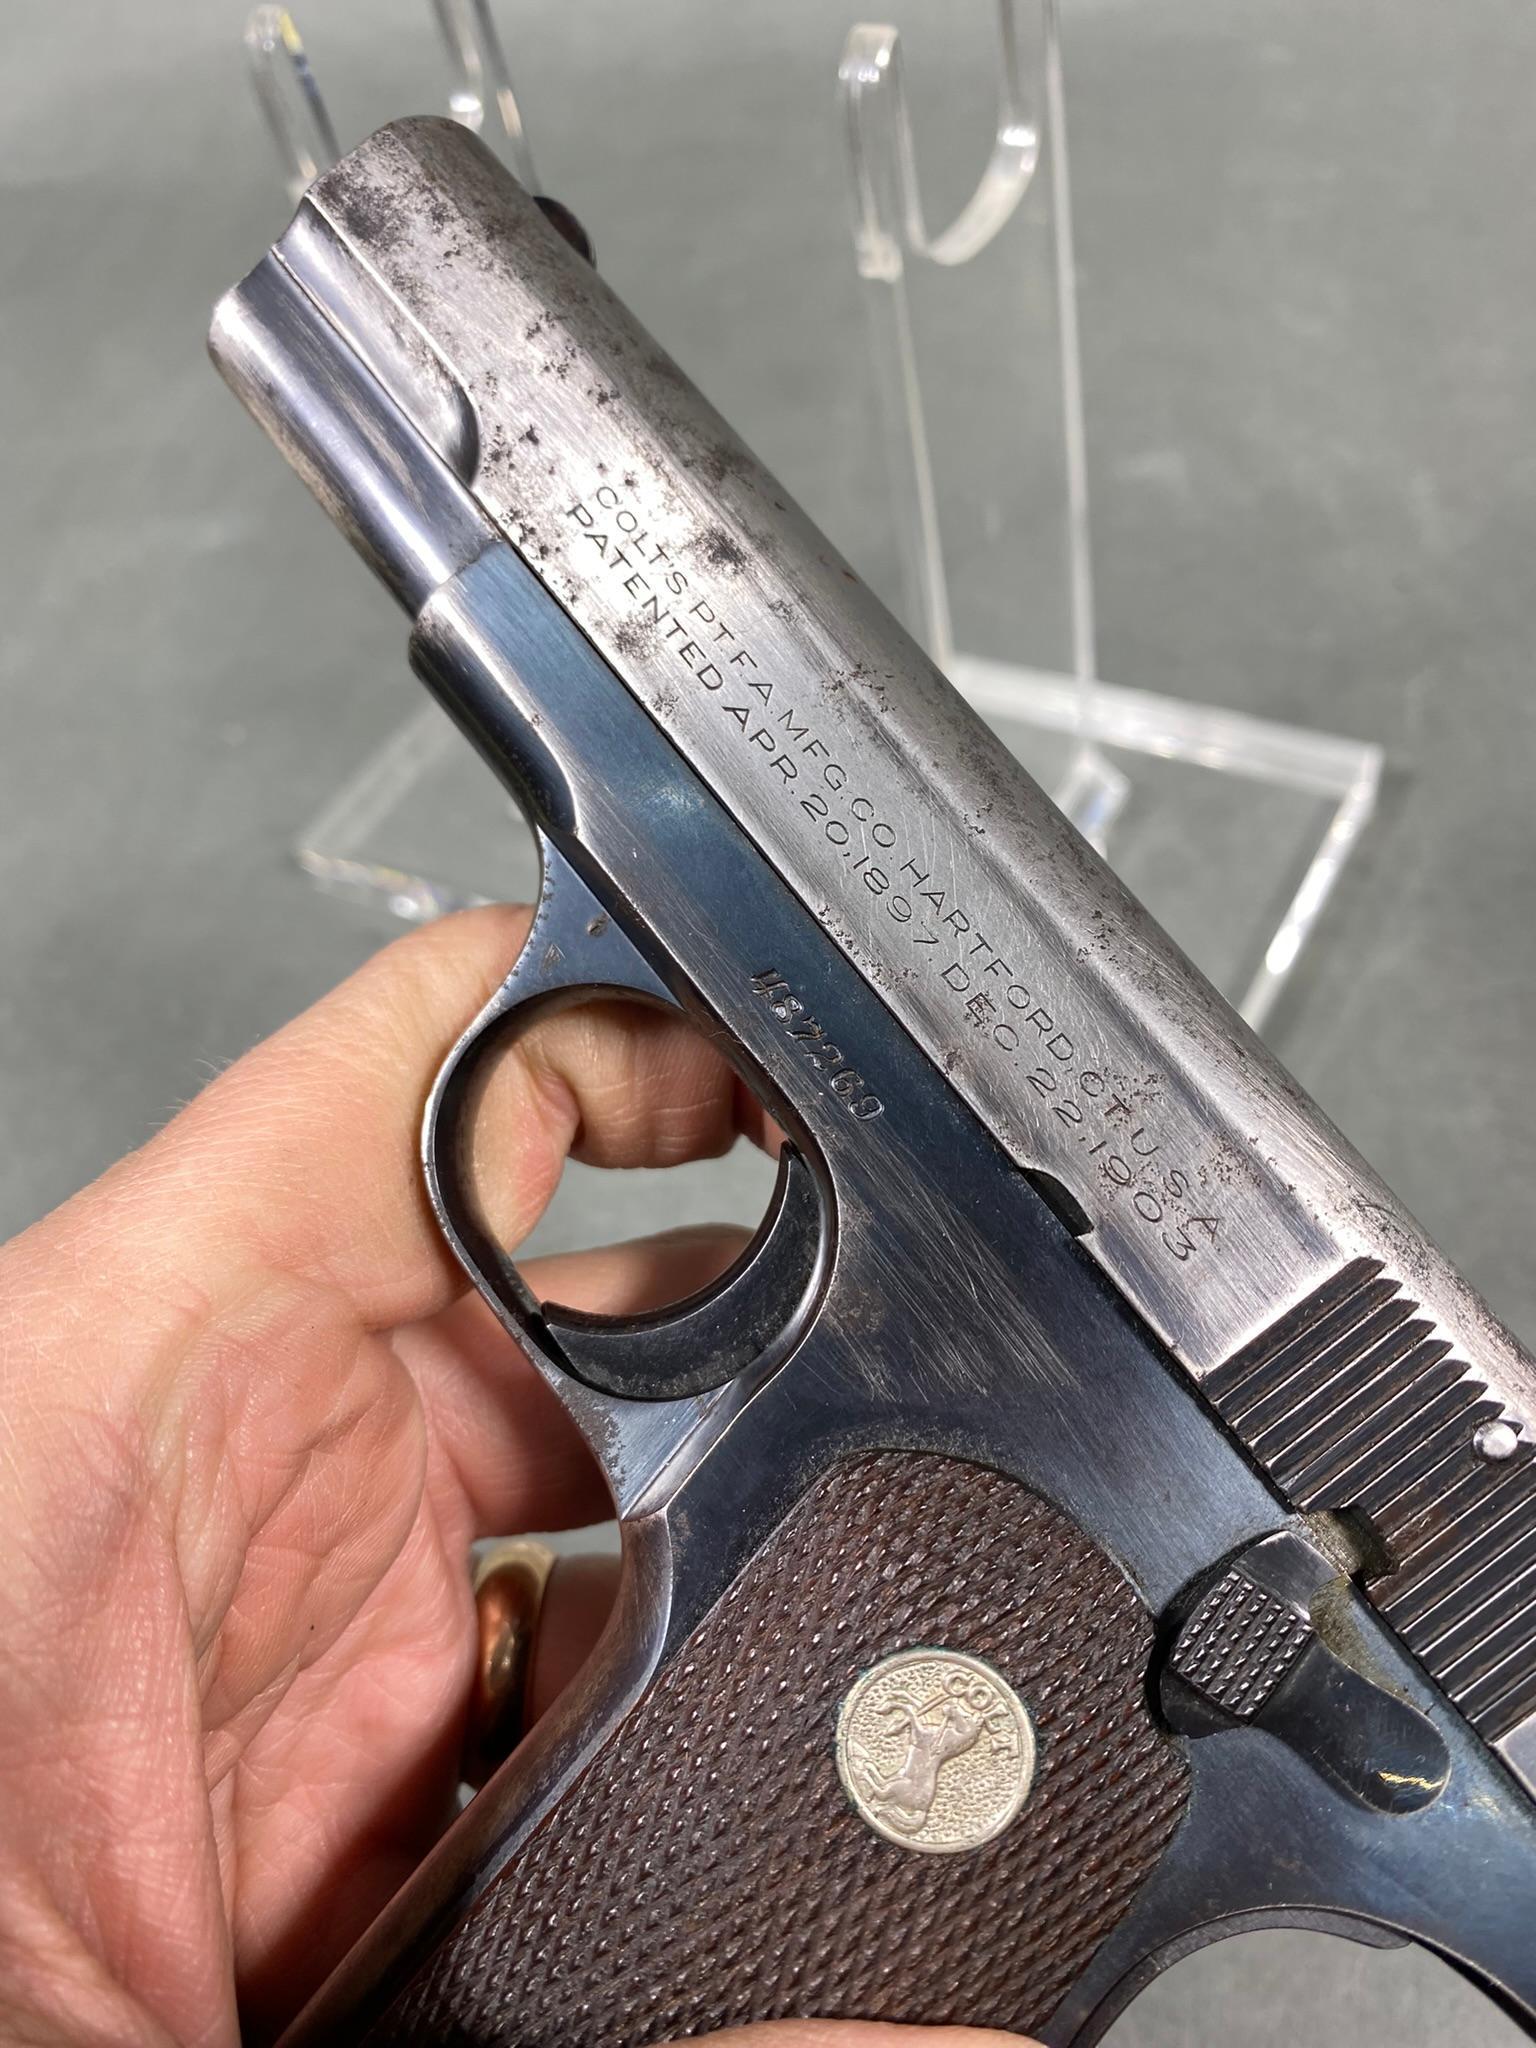 Colt Model 1903 Hammerless Pistol with Magazine